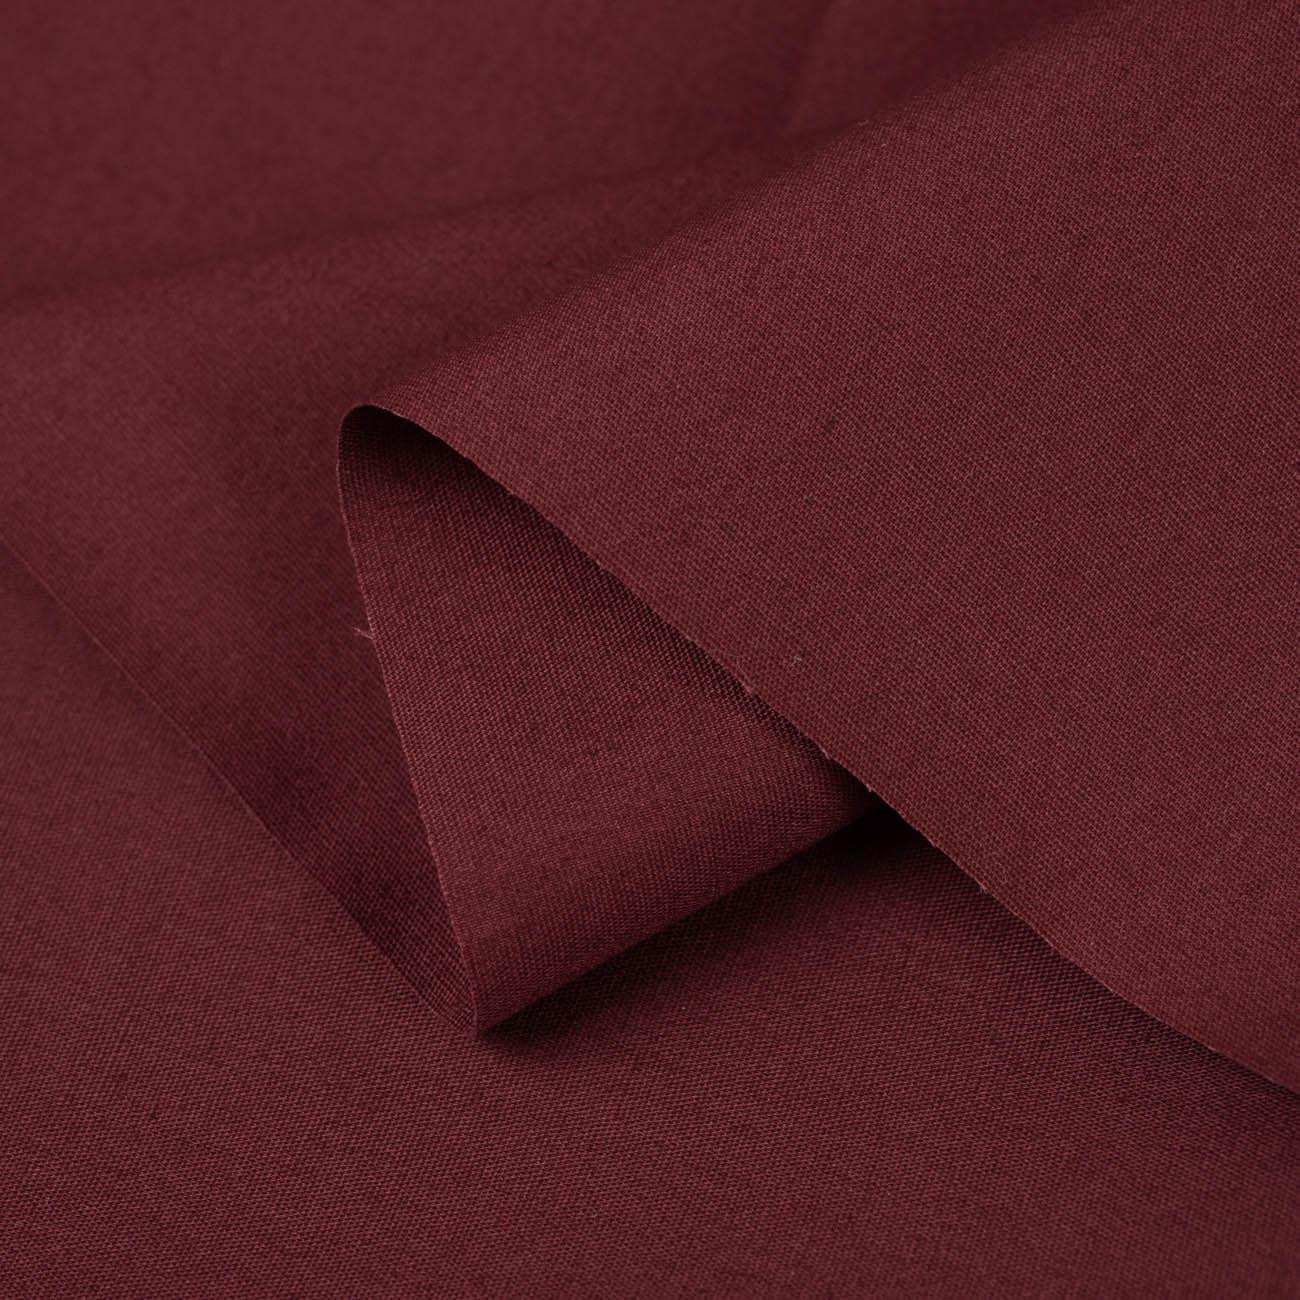 MAROON - Cotton woven fabric